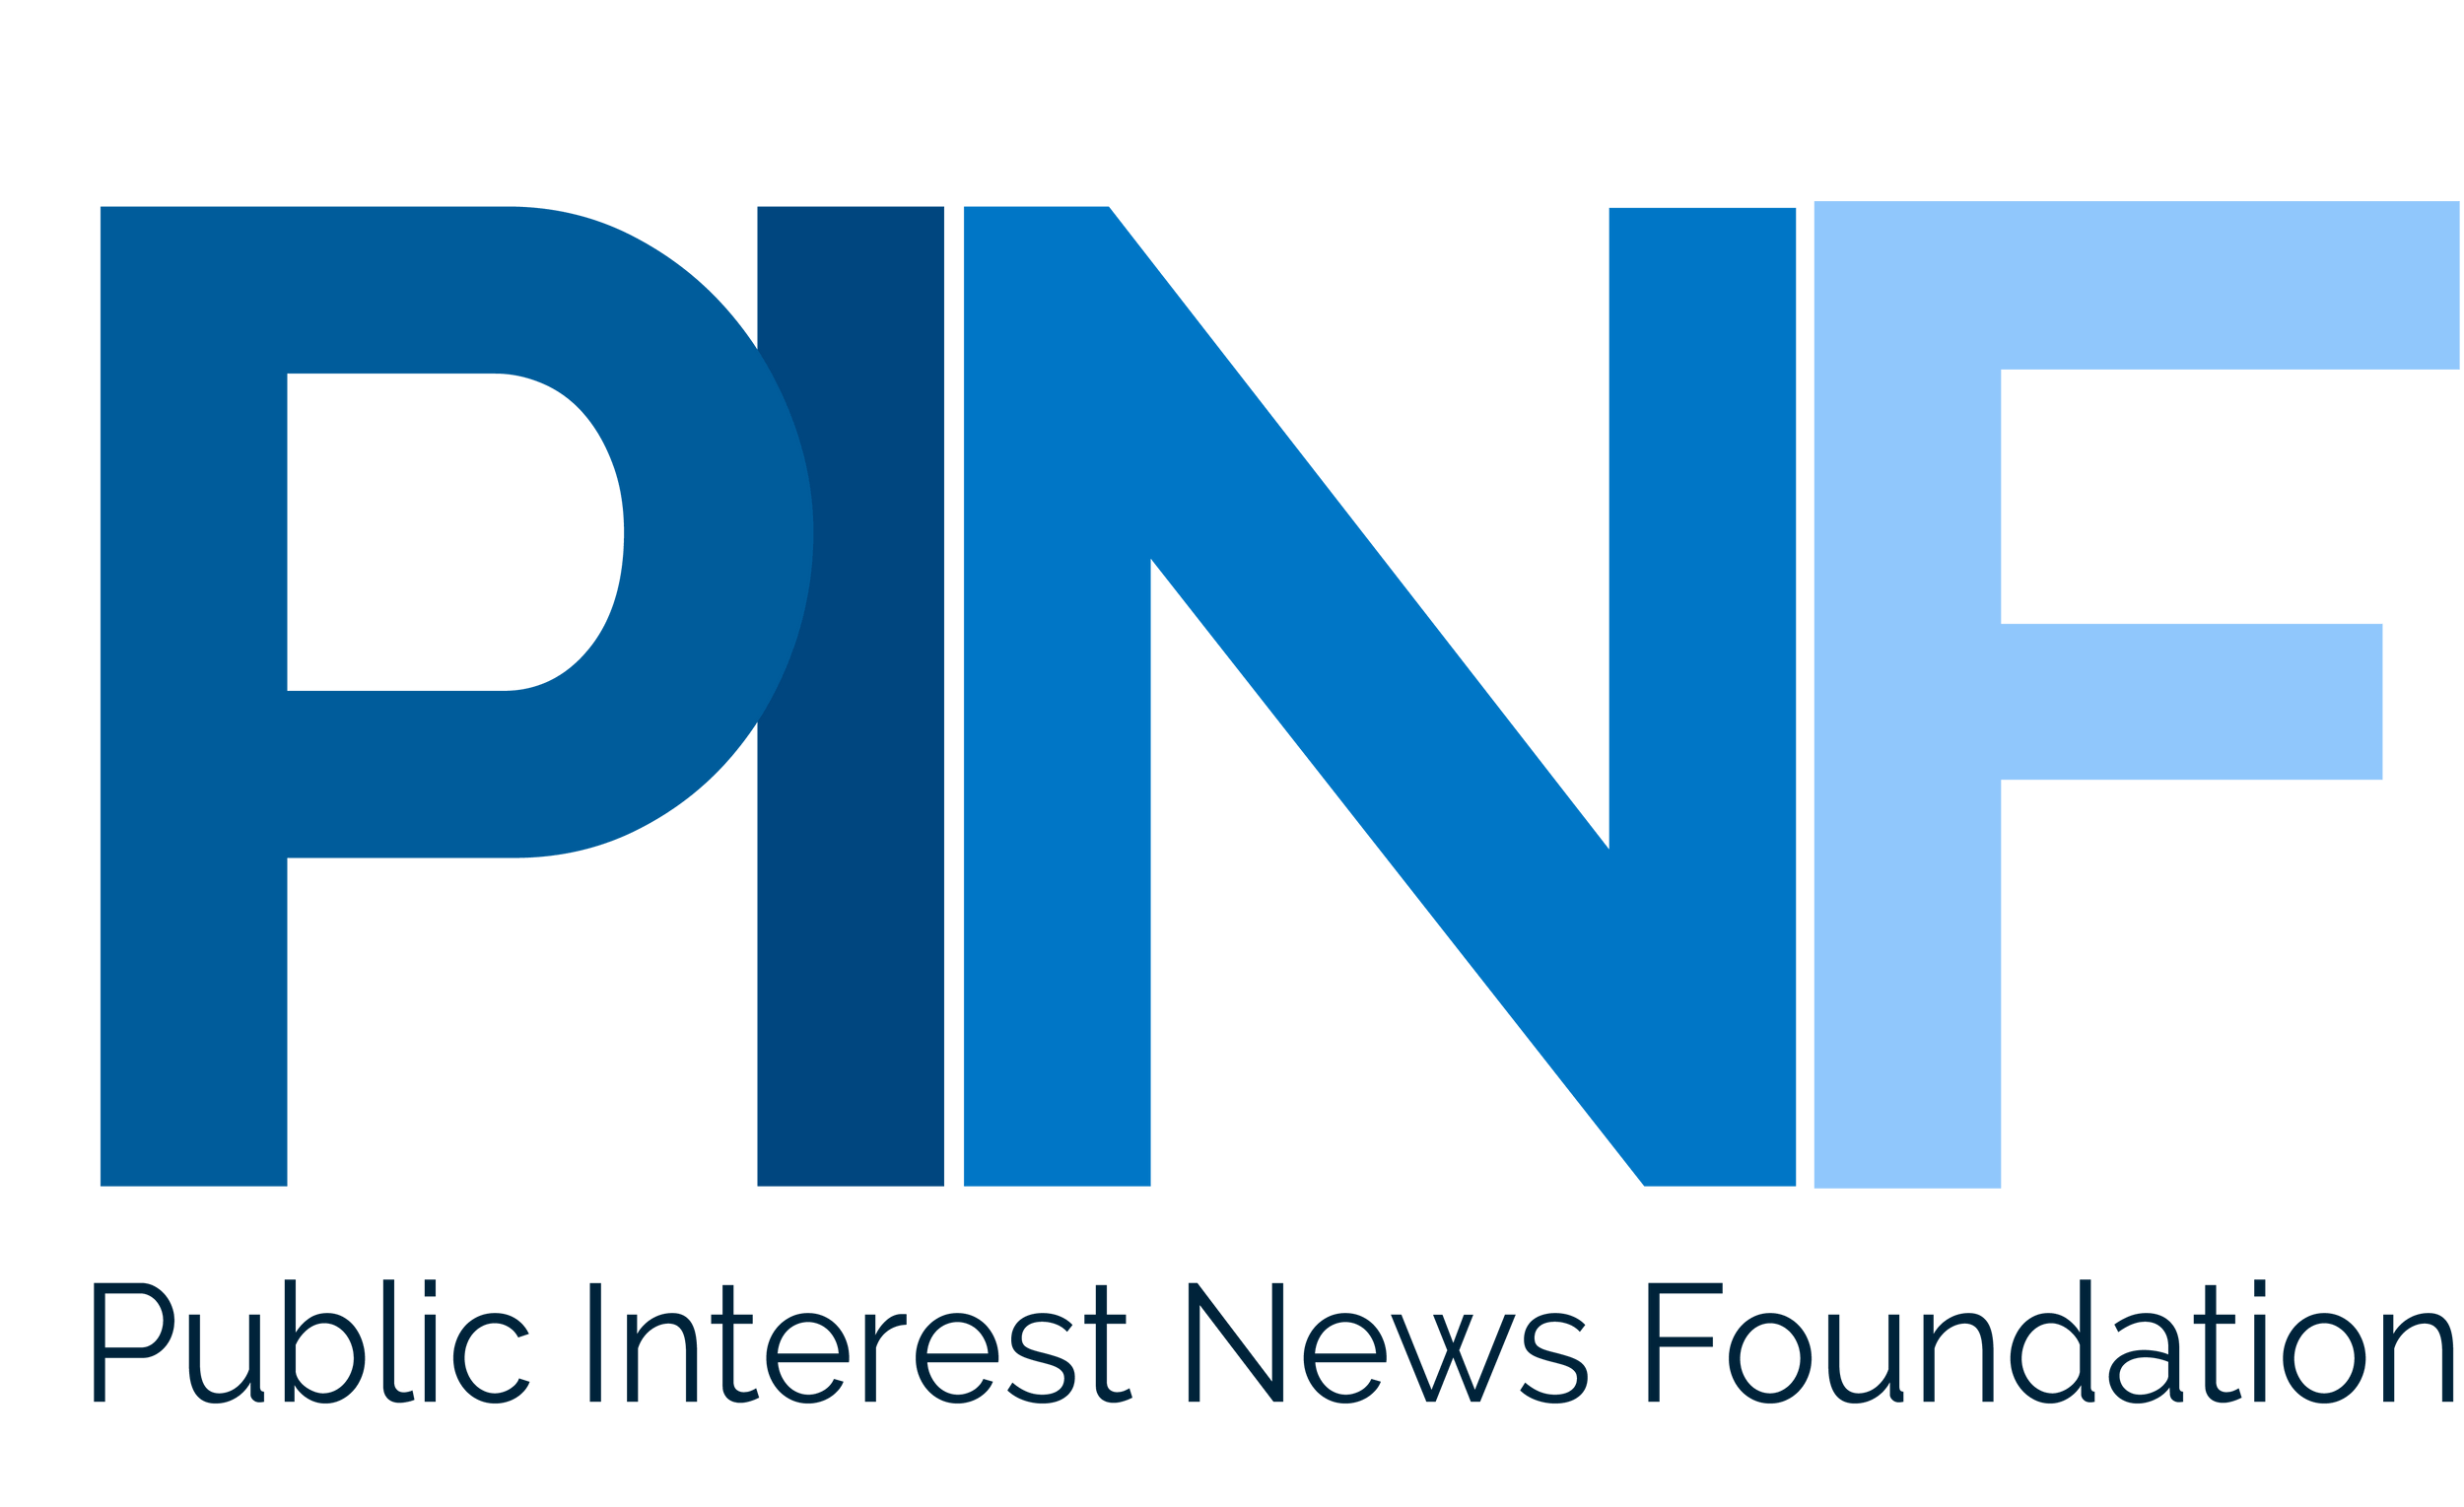 PINF Public Interest News Foundation